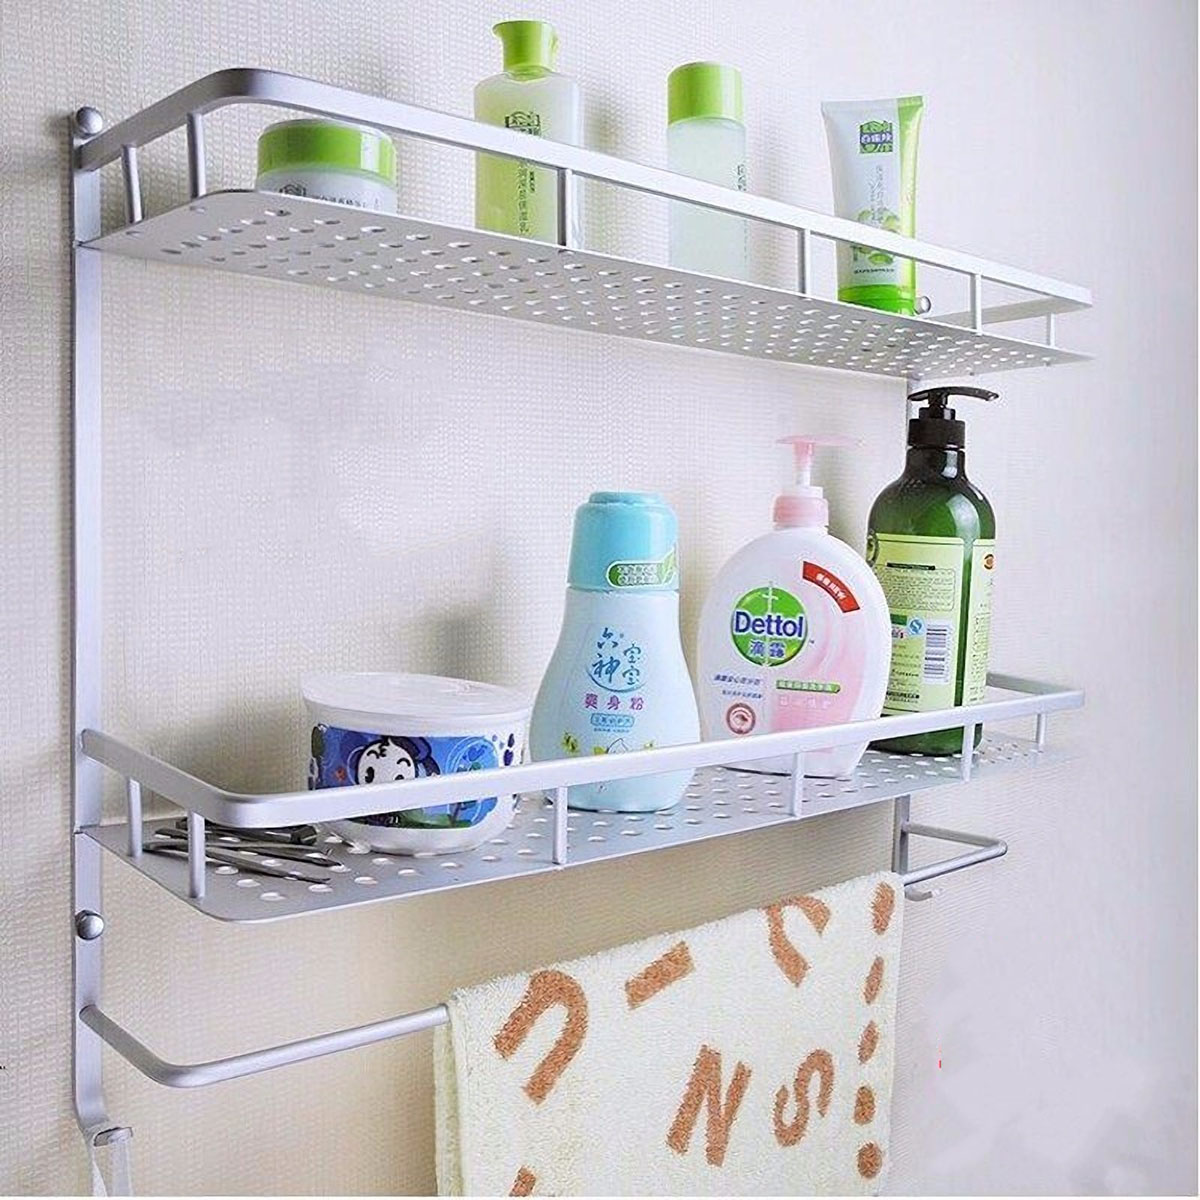 12-Layers-Bathroom-Wall-Mounted-Rack-Alumimum-Storage-Shelf-Towel-Bar-Holder-Hanger-Organizer-Shelf-1771304-7